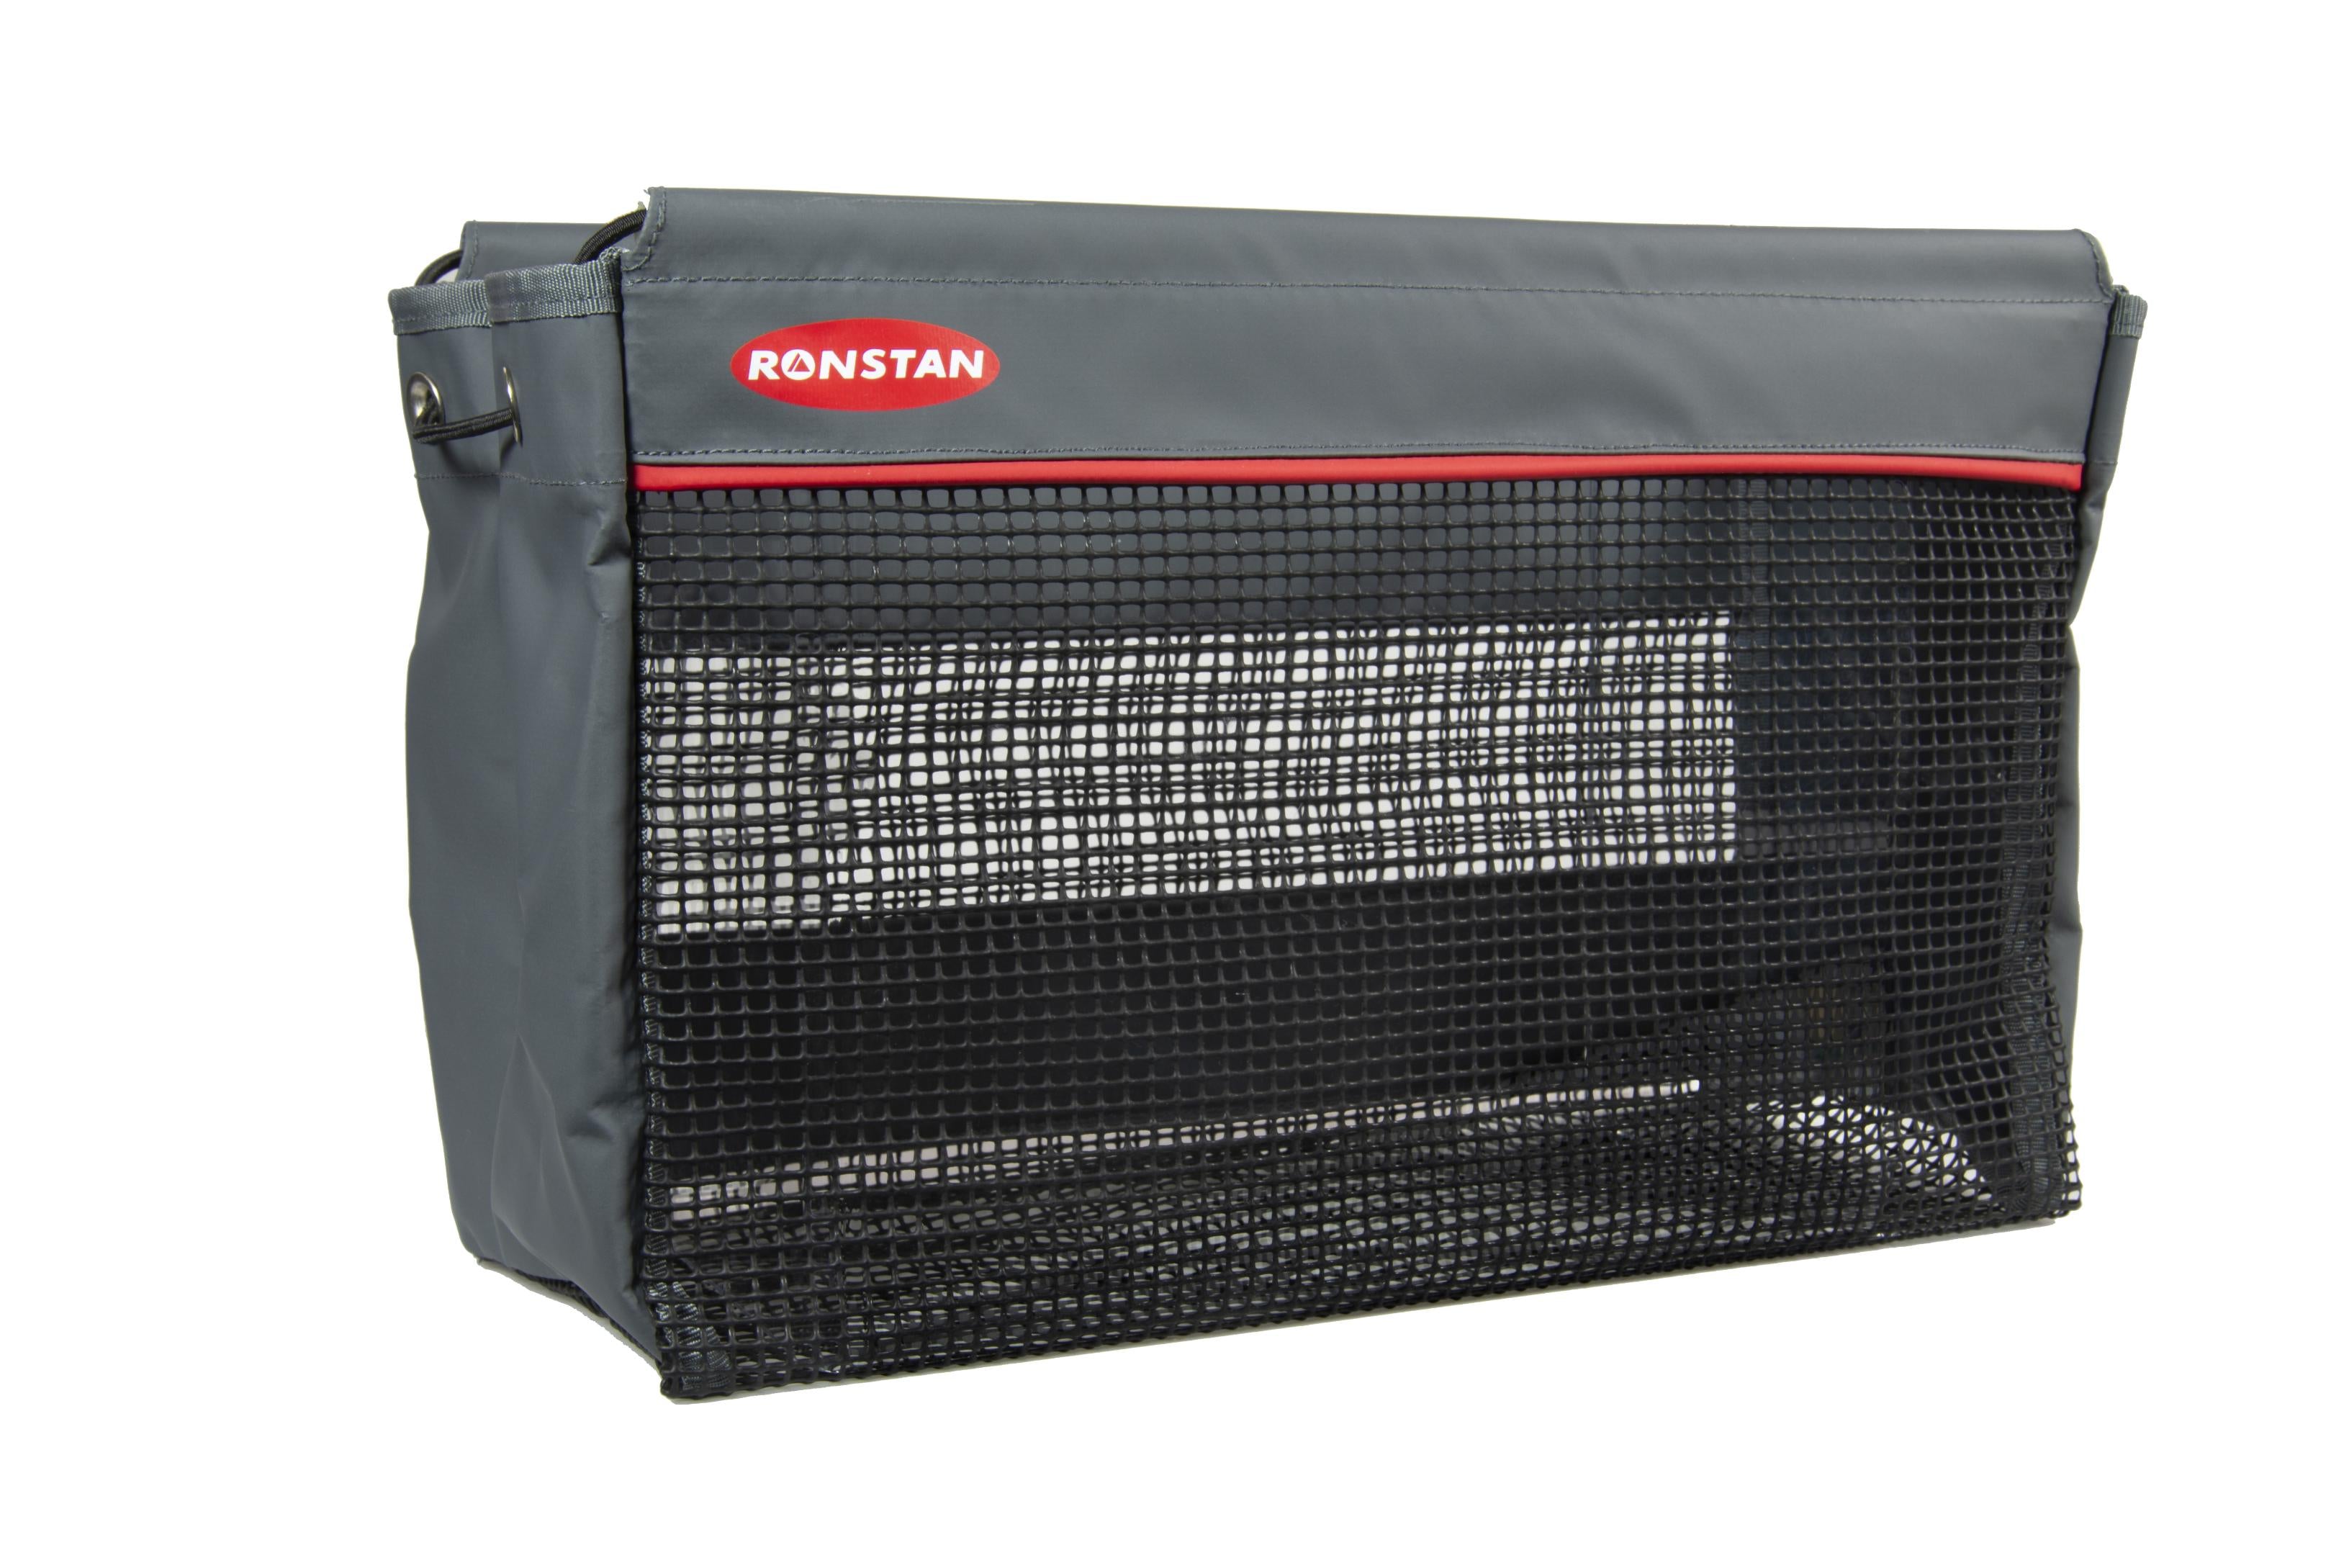 Ronstan Rope Bag - Medium - 15.75" x 9.875" x 7.875"